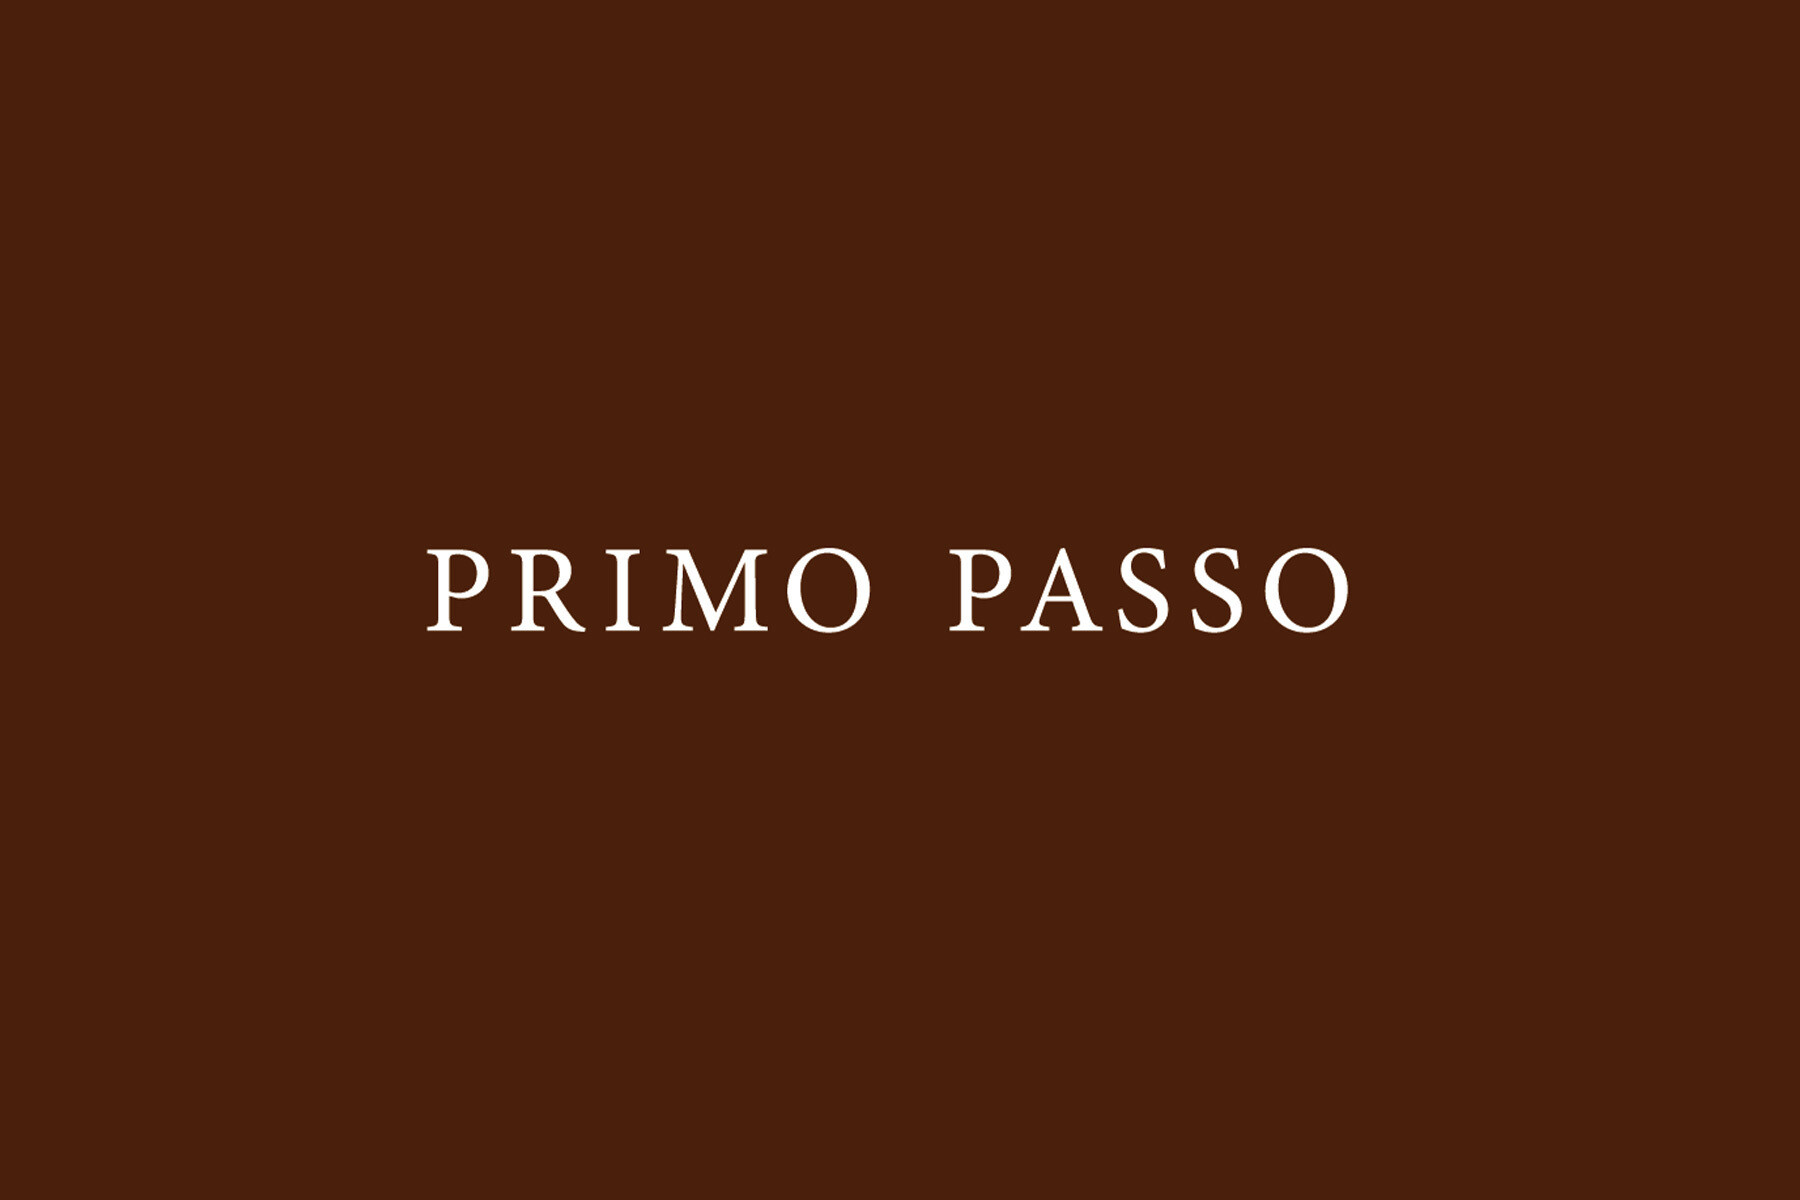 PRIMO PASSO's images6